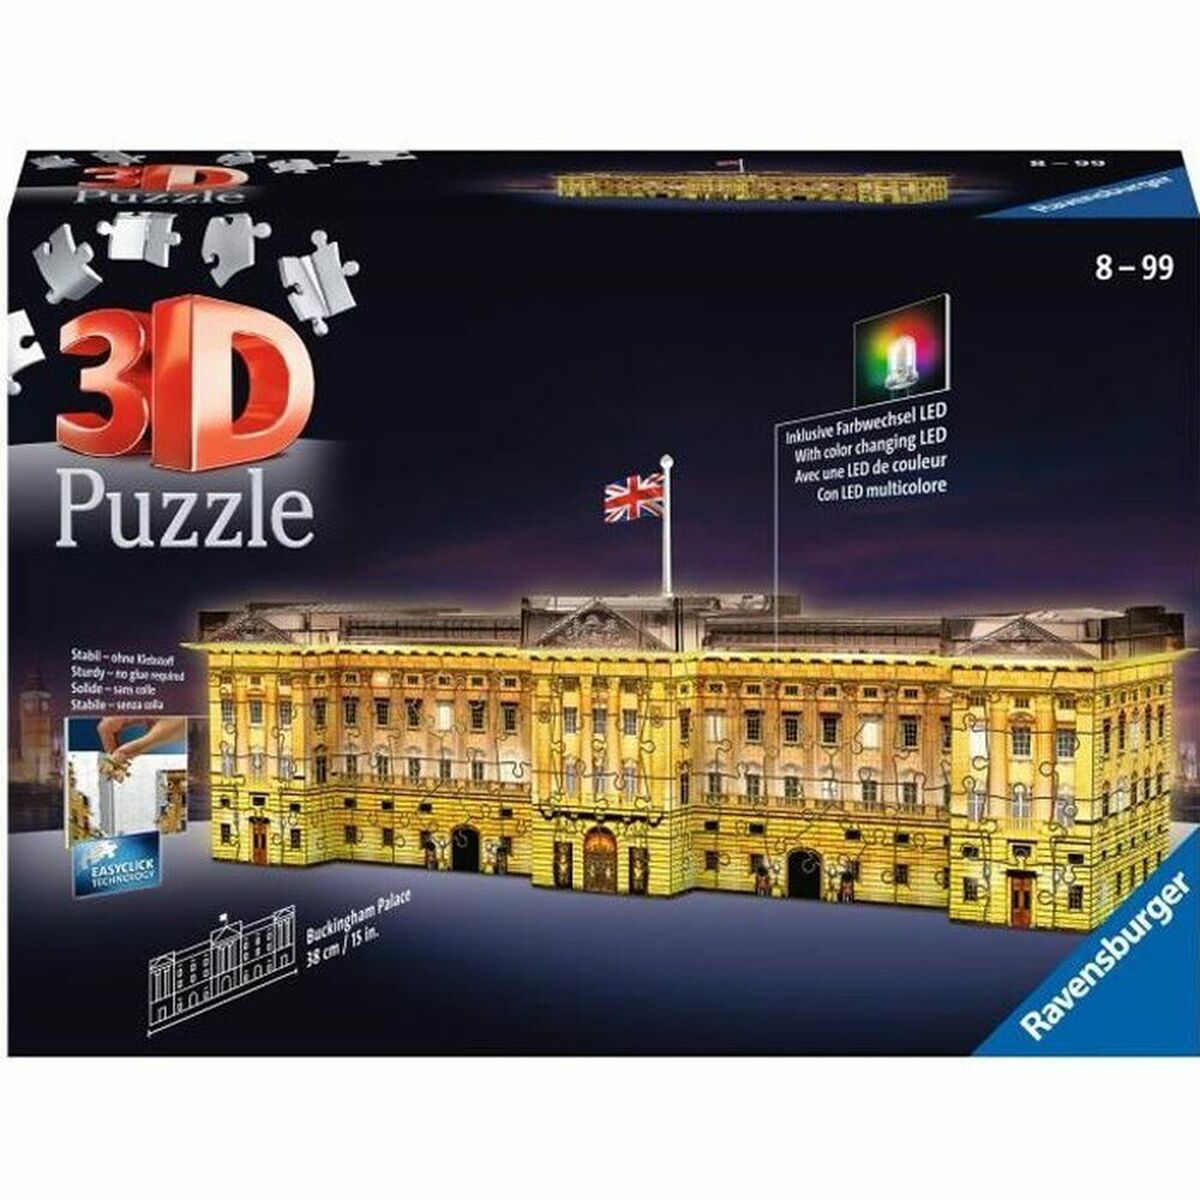 3D Puzzle Ravensburger Buckingham Palace Illuminated 216 Dijelovi (216 Dijelovi)